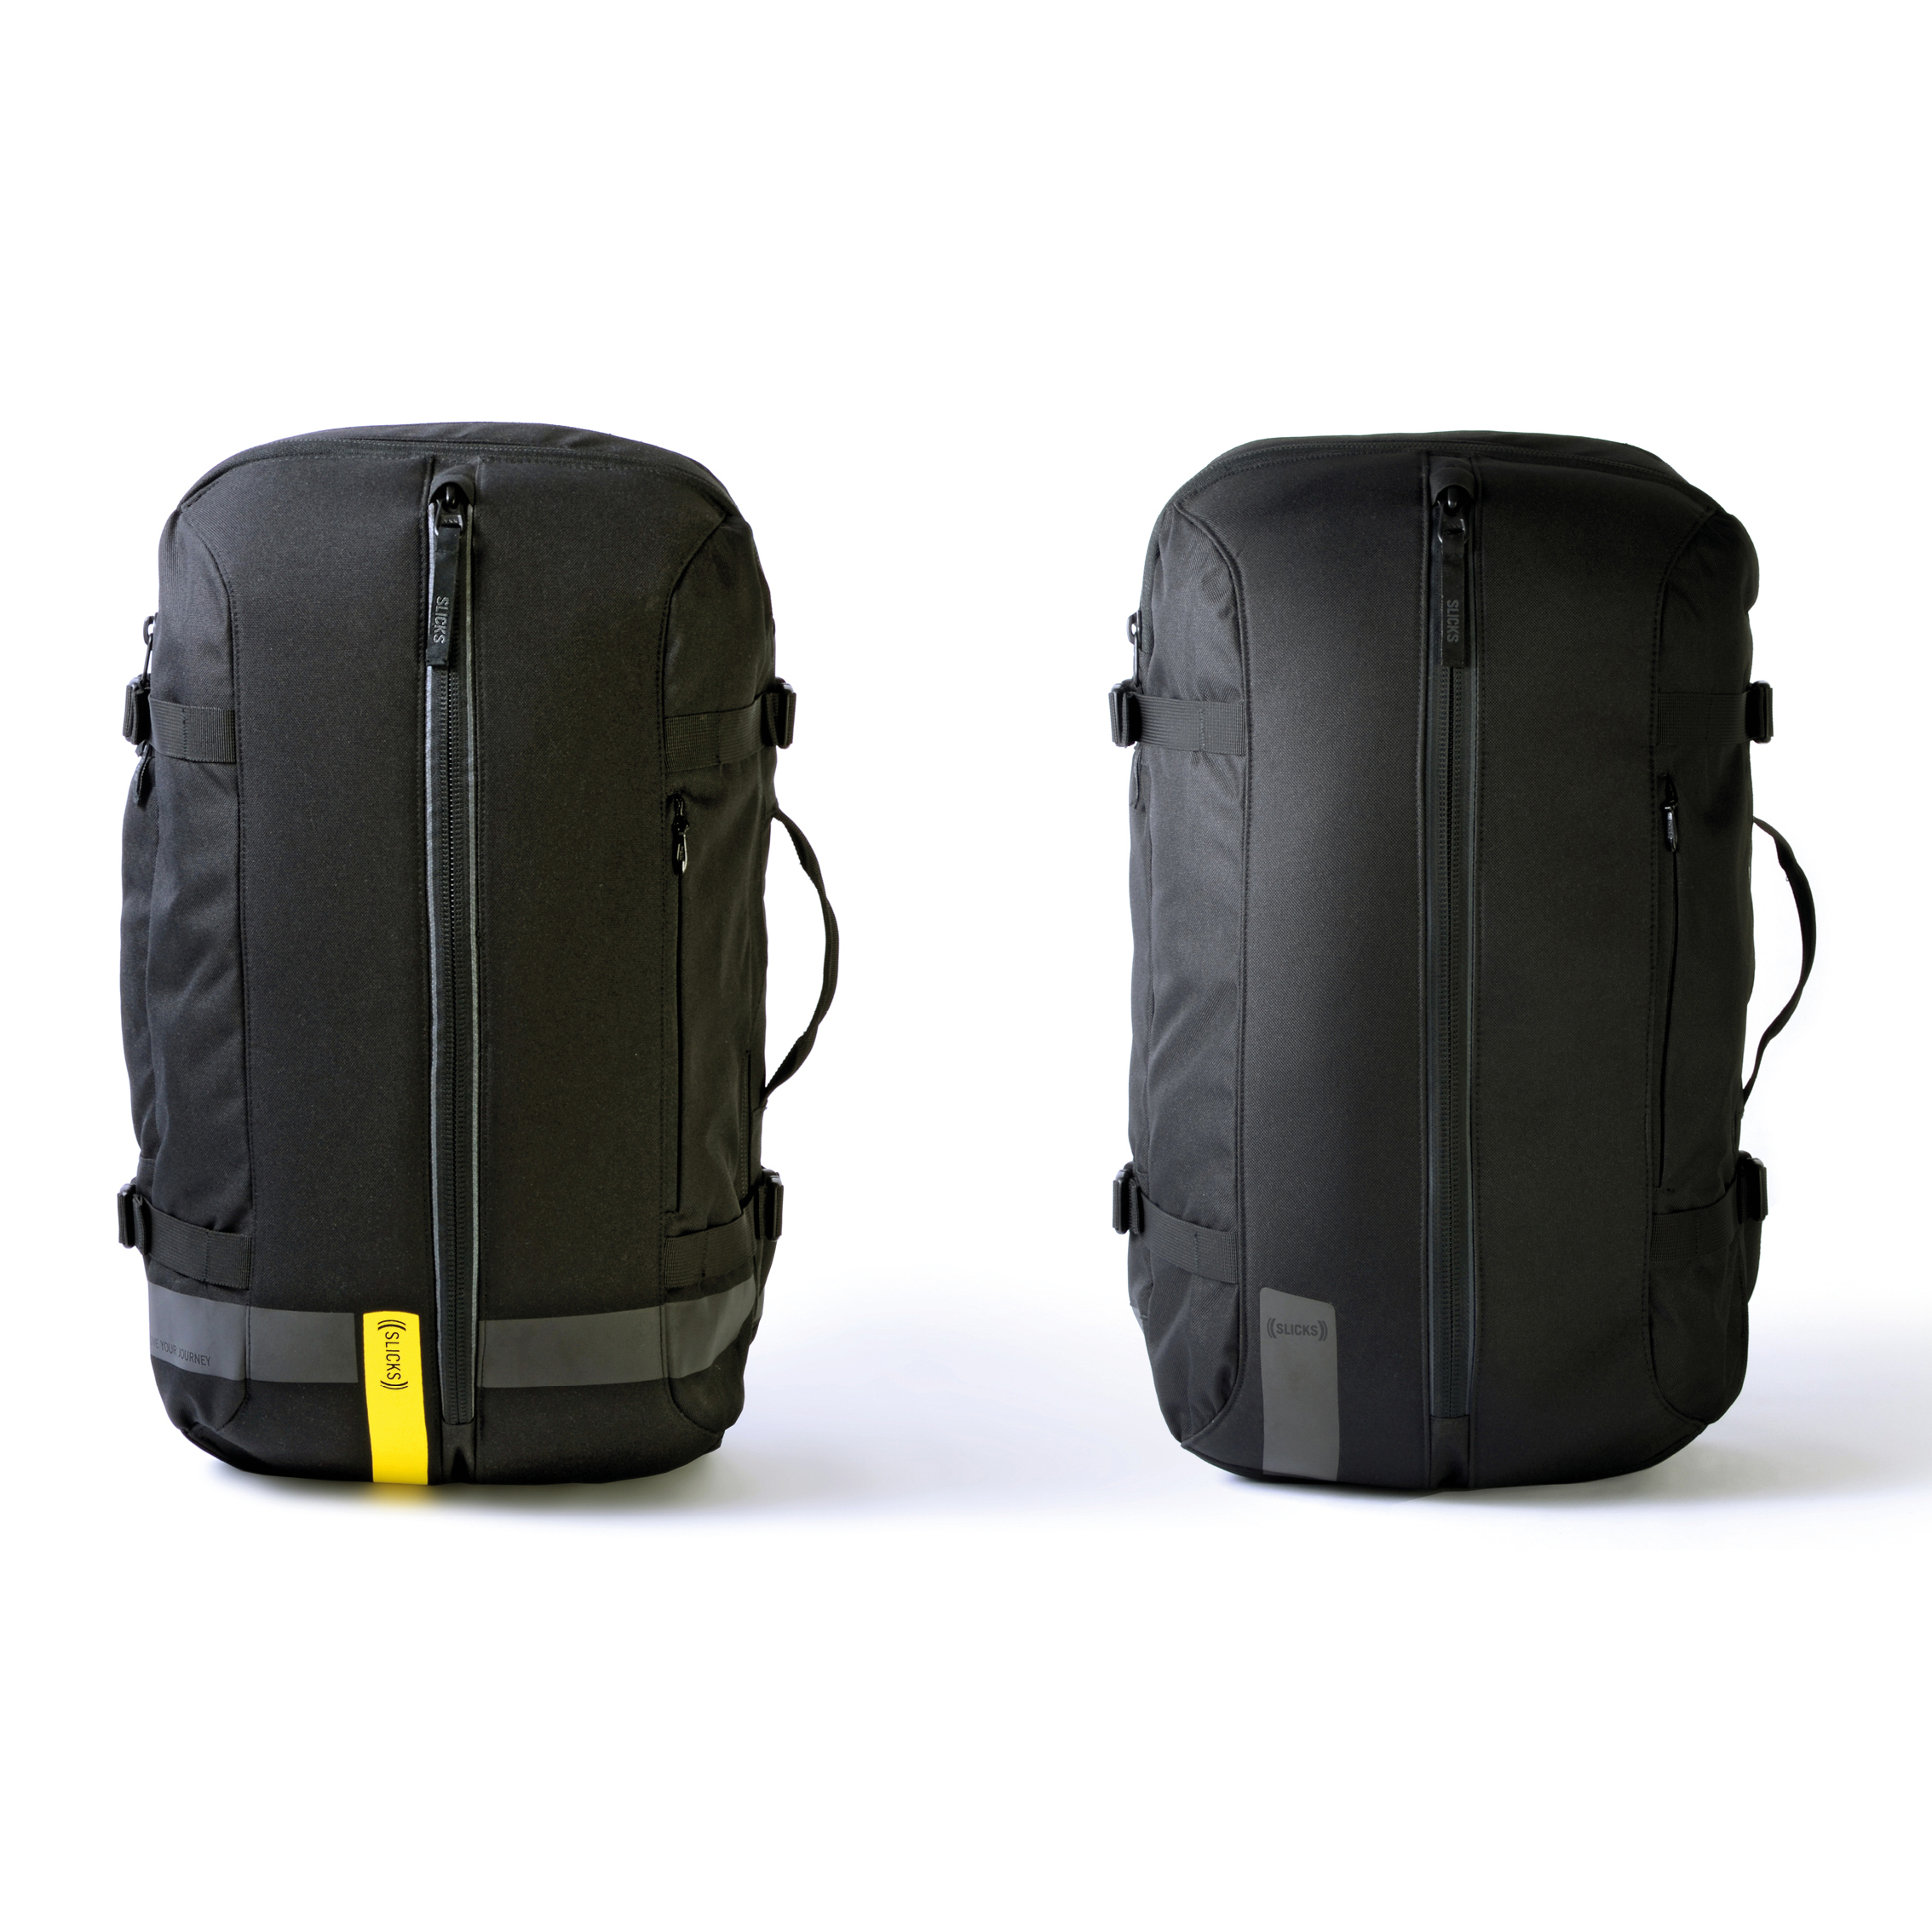 SLICKS Travel Backpack Team “Pumped” Over Three-Day Kickstarter Victory